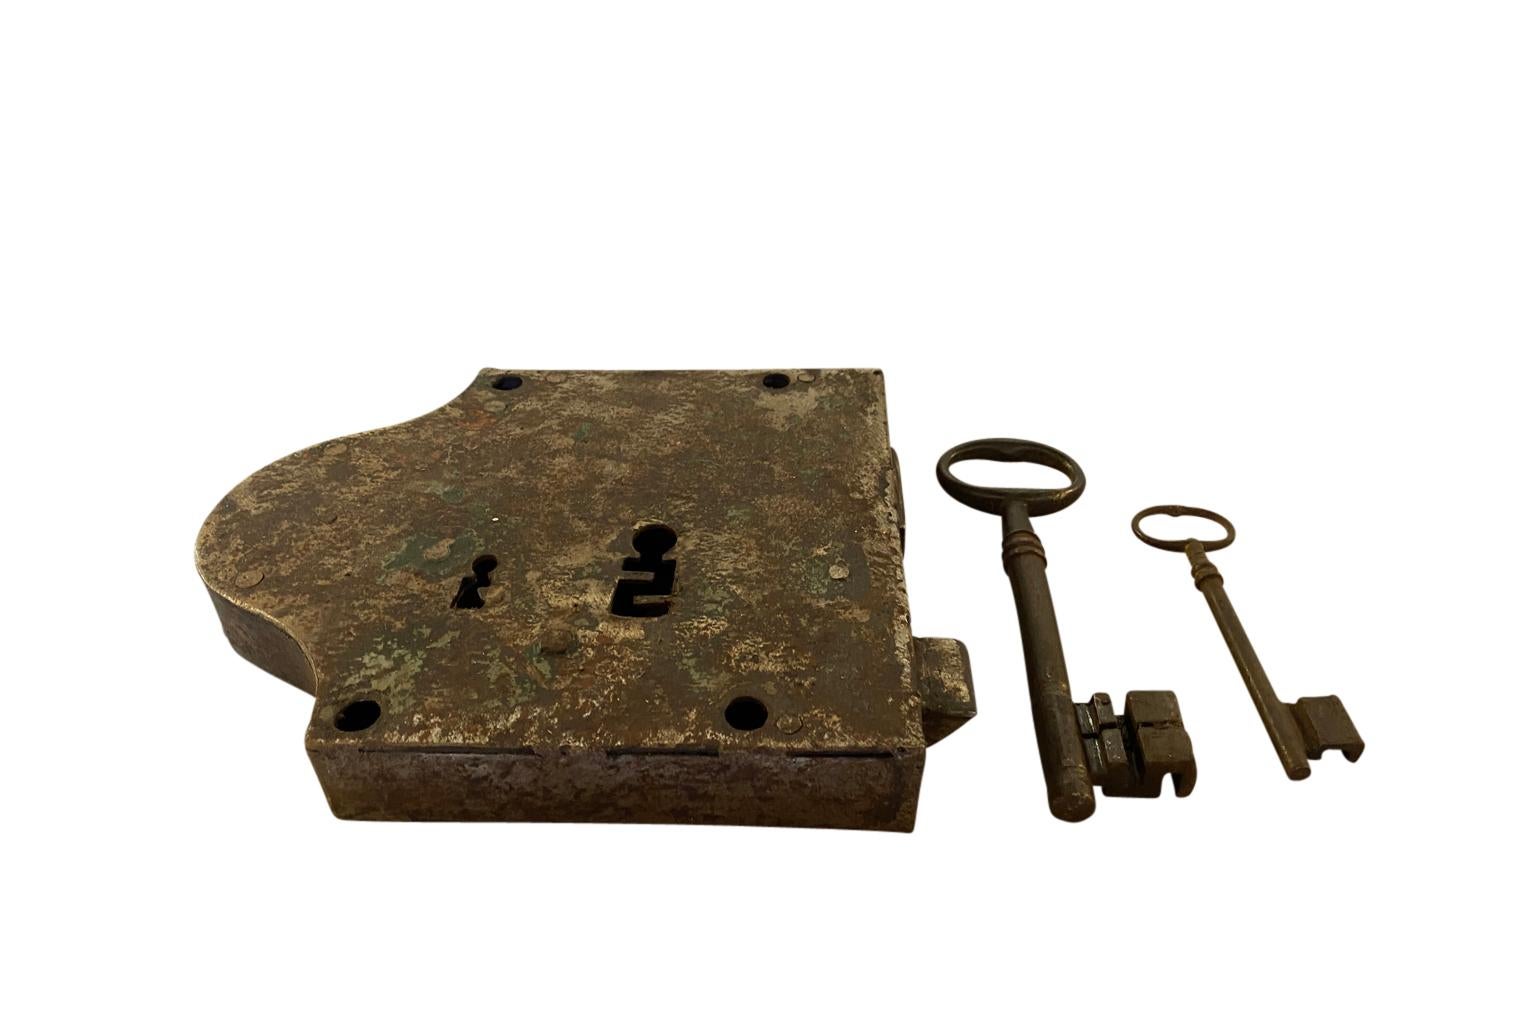 17th century locks